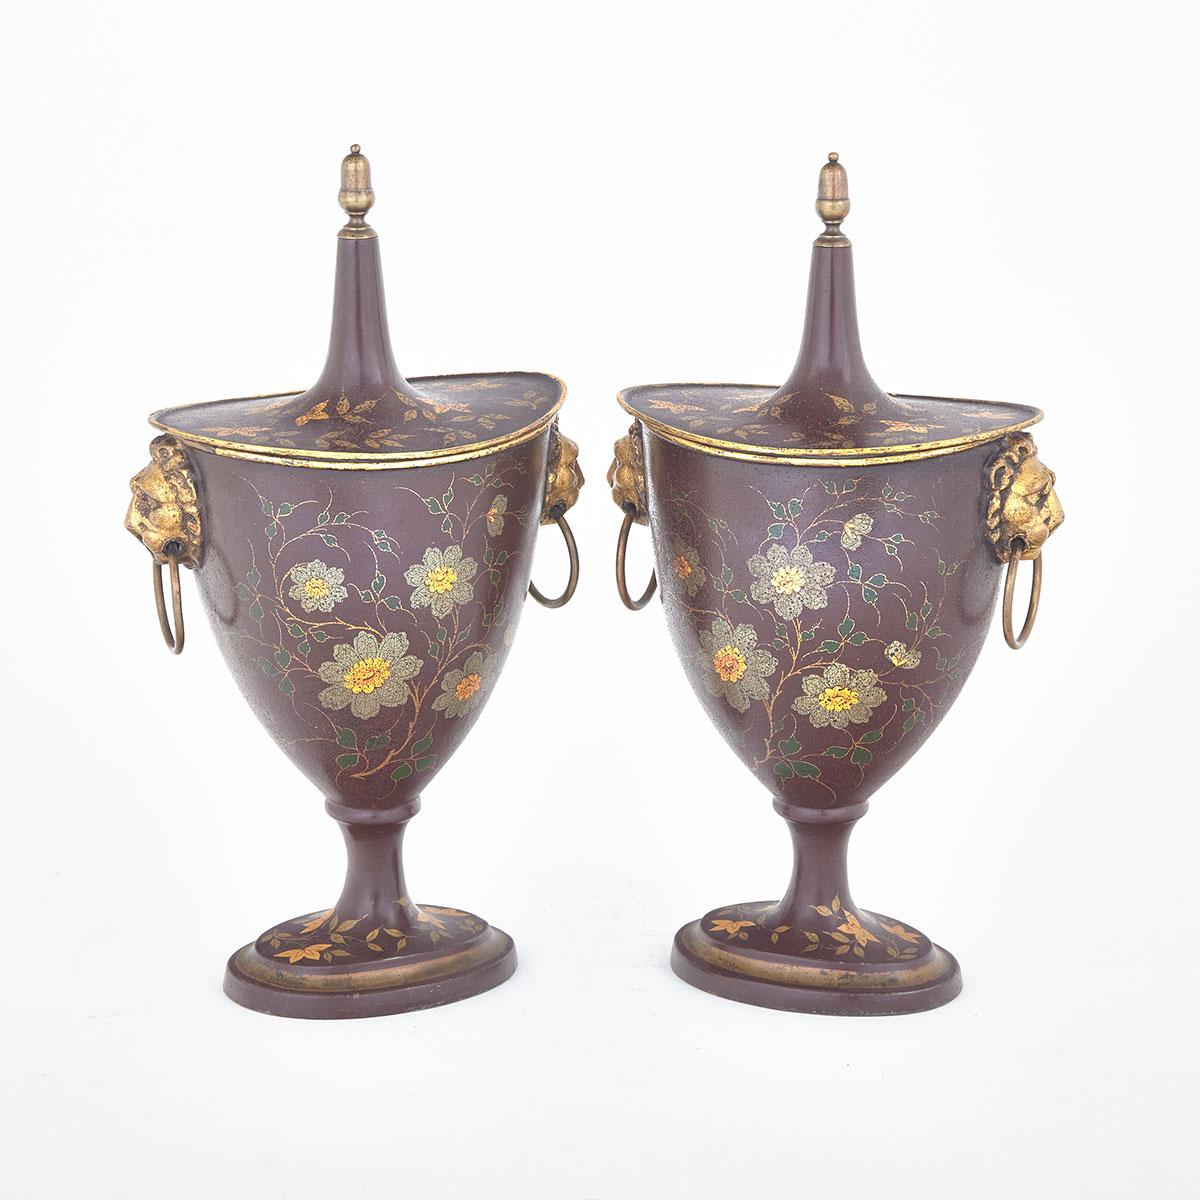 Pair of Regency Toleware Chestnut Urns, c.1815